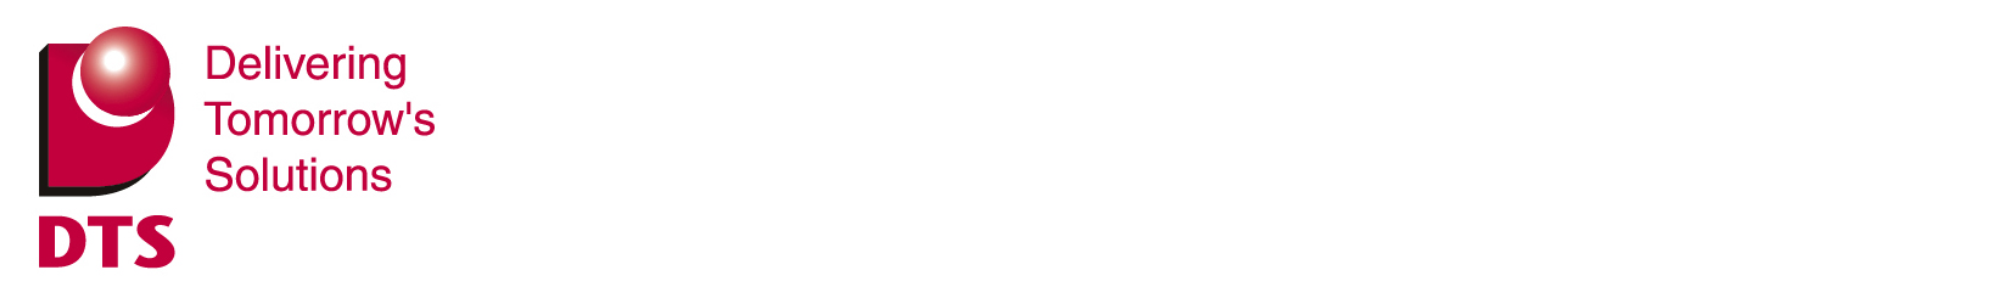 dts-logo-0912.png